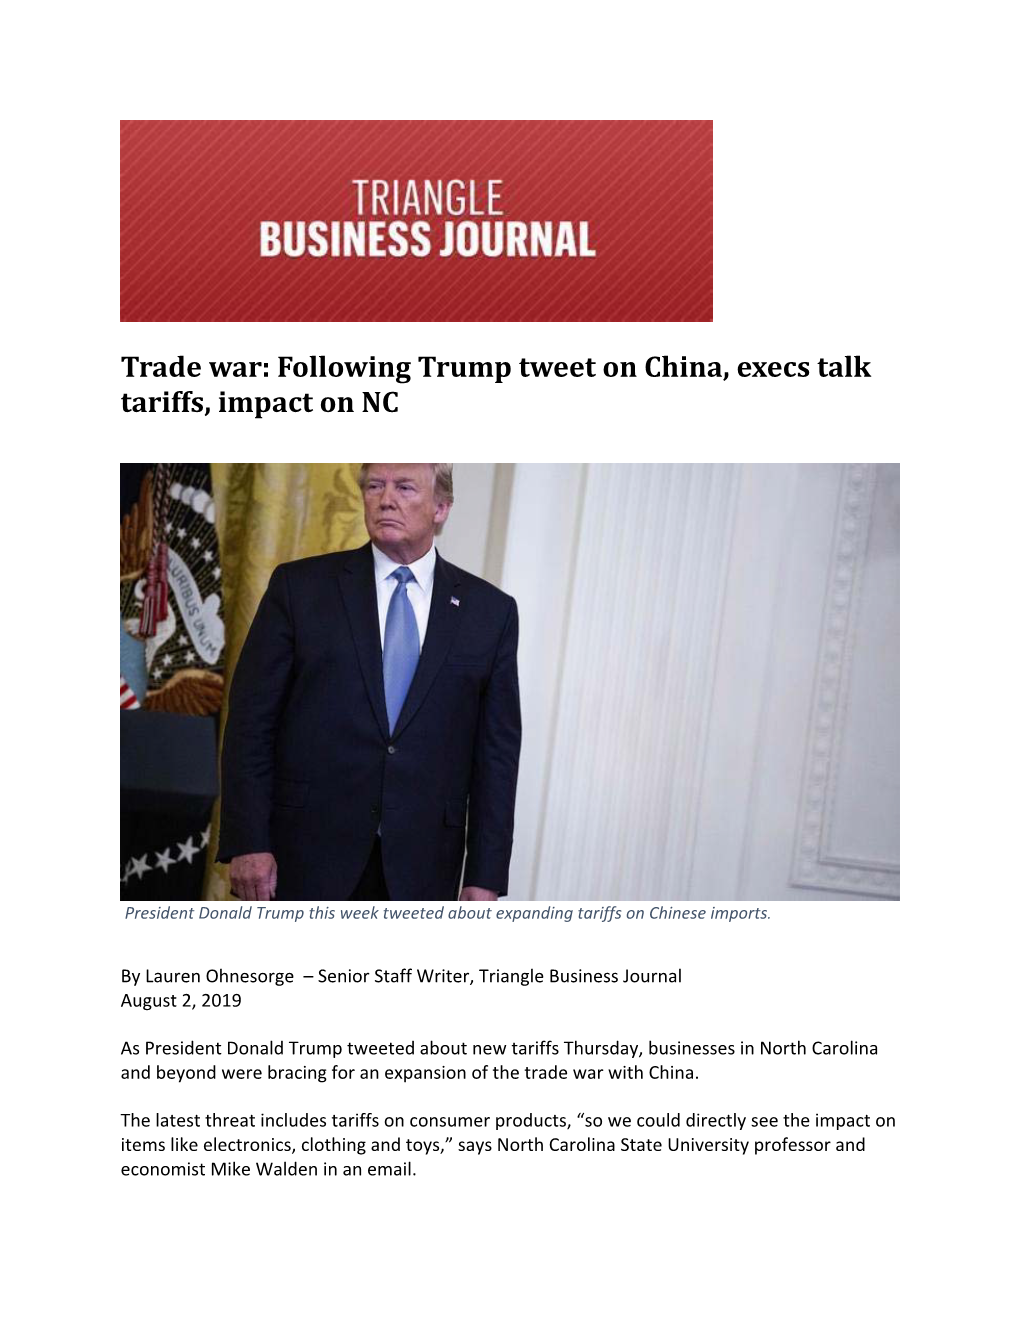 Trade War: Following Trump Tweet on China, Execs Talk Tariffs, Impact on NC